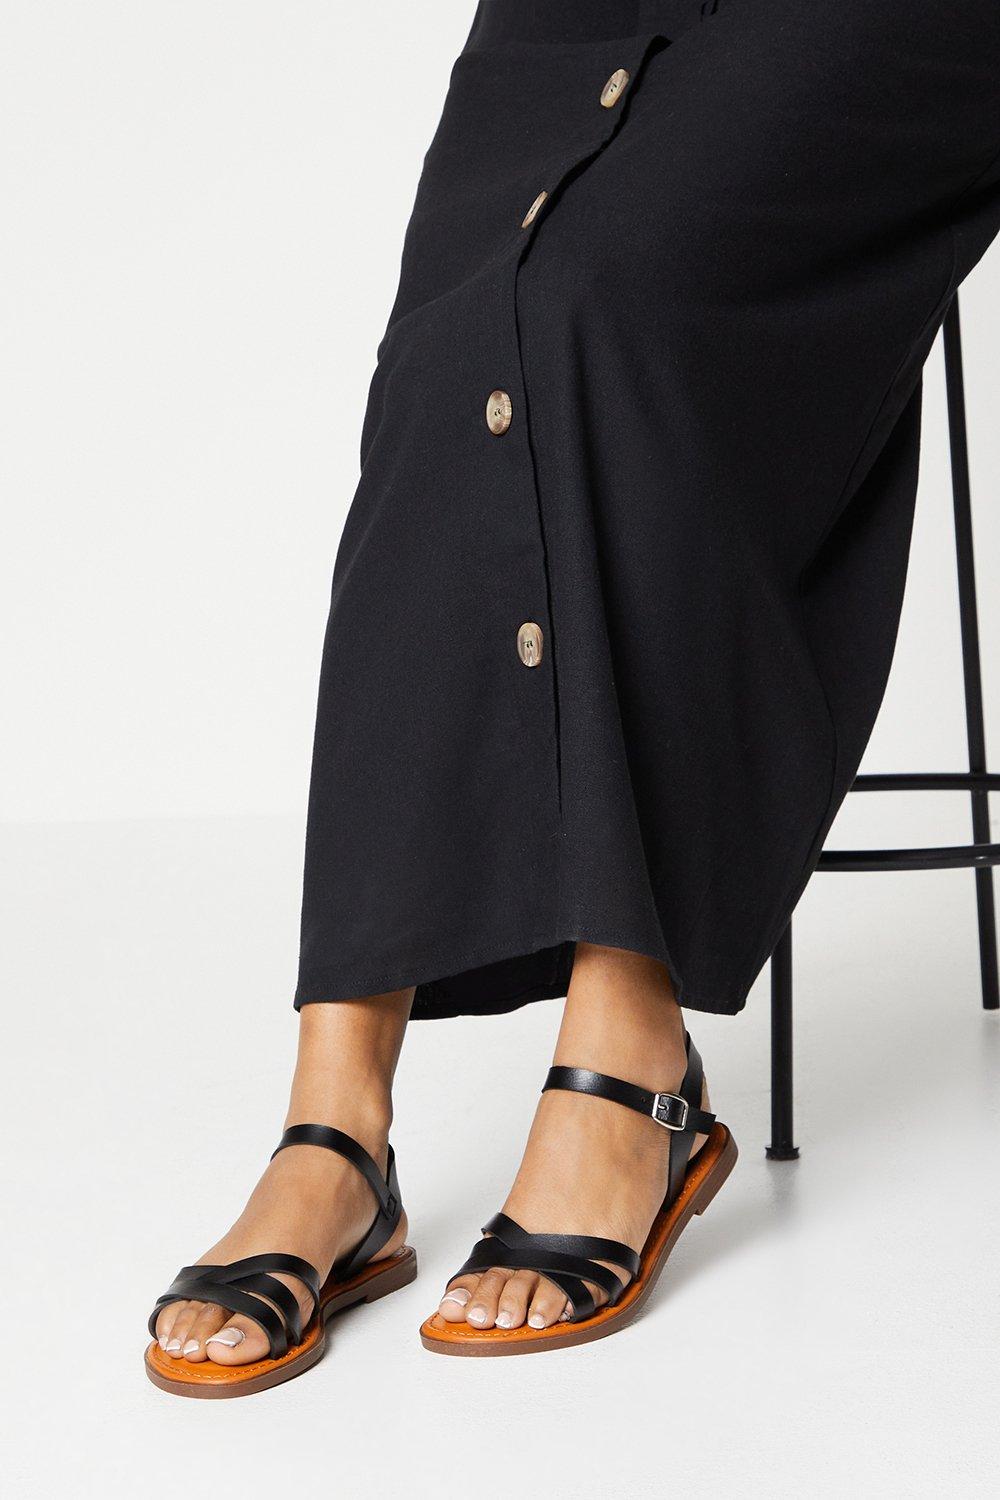 Women’s Good For The Sole: Melanie Comfort Cross Strap Flat Sandals - black - 5